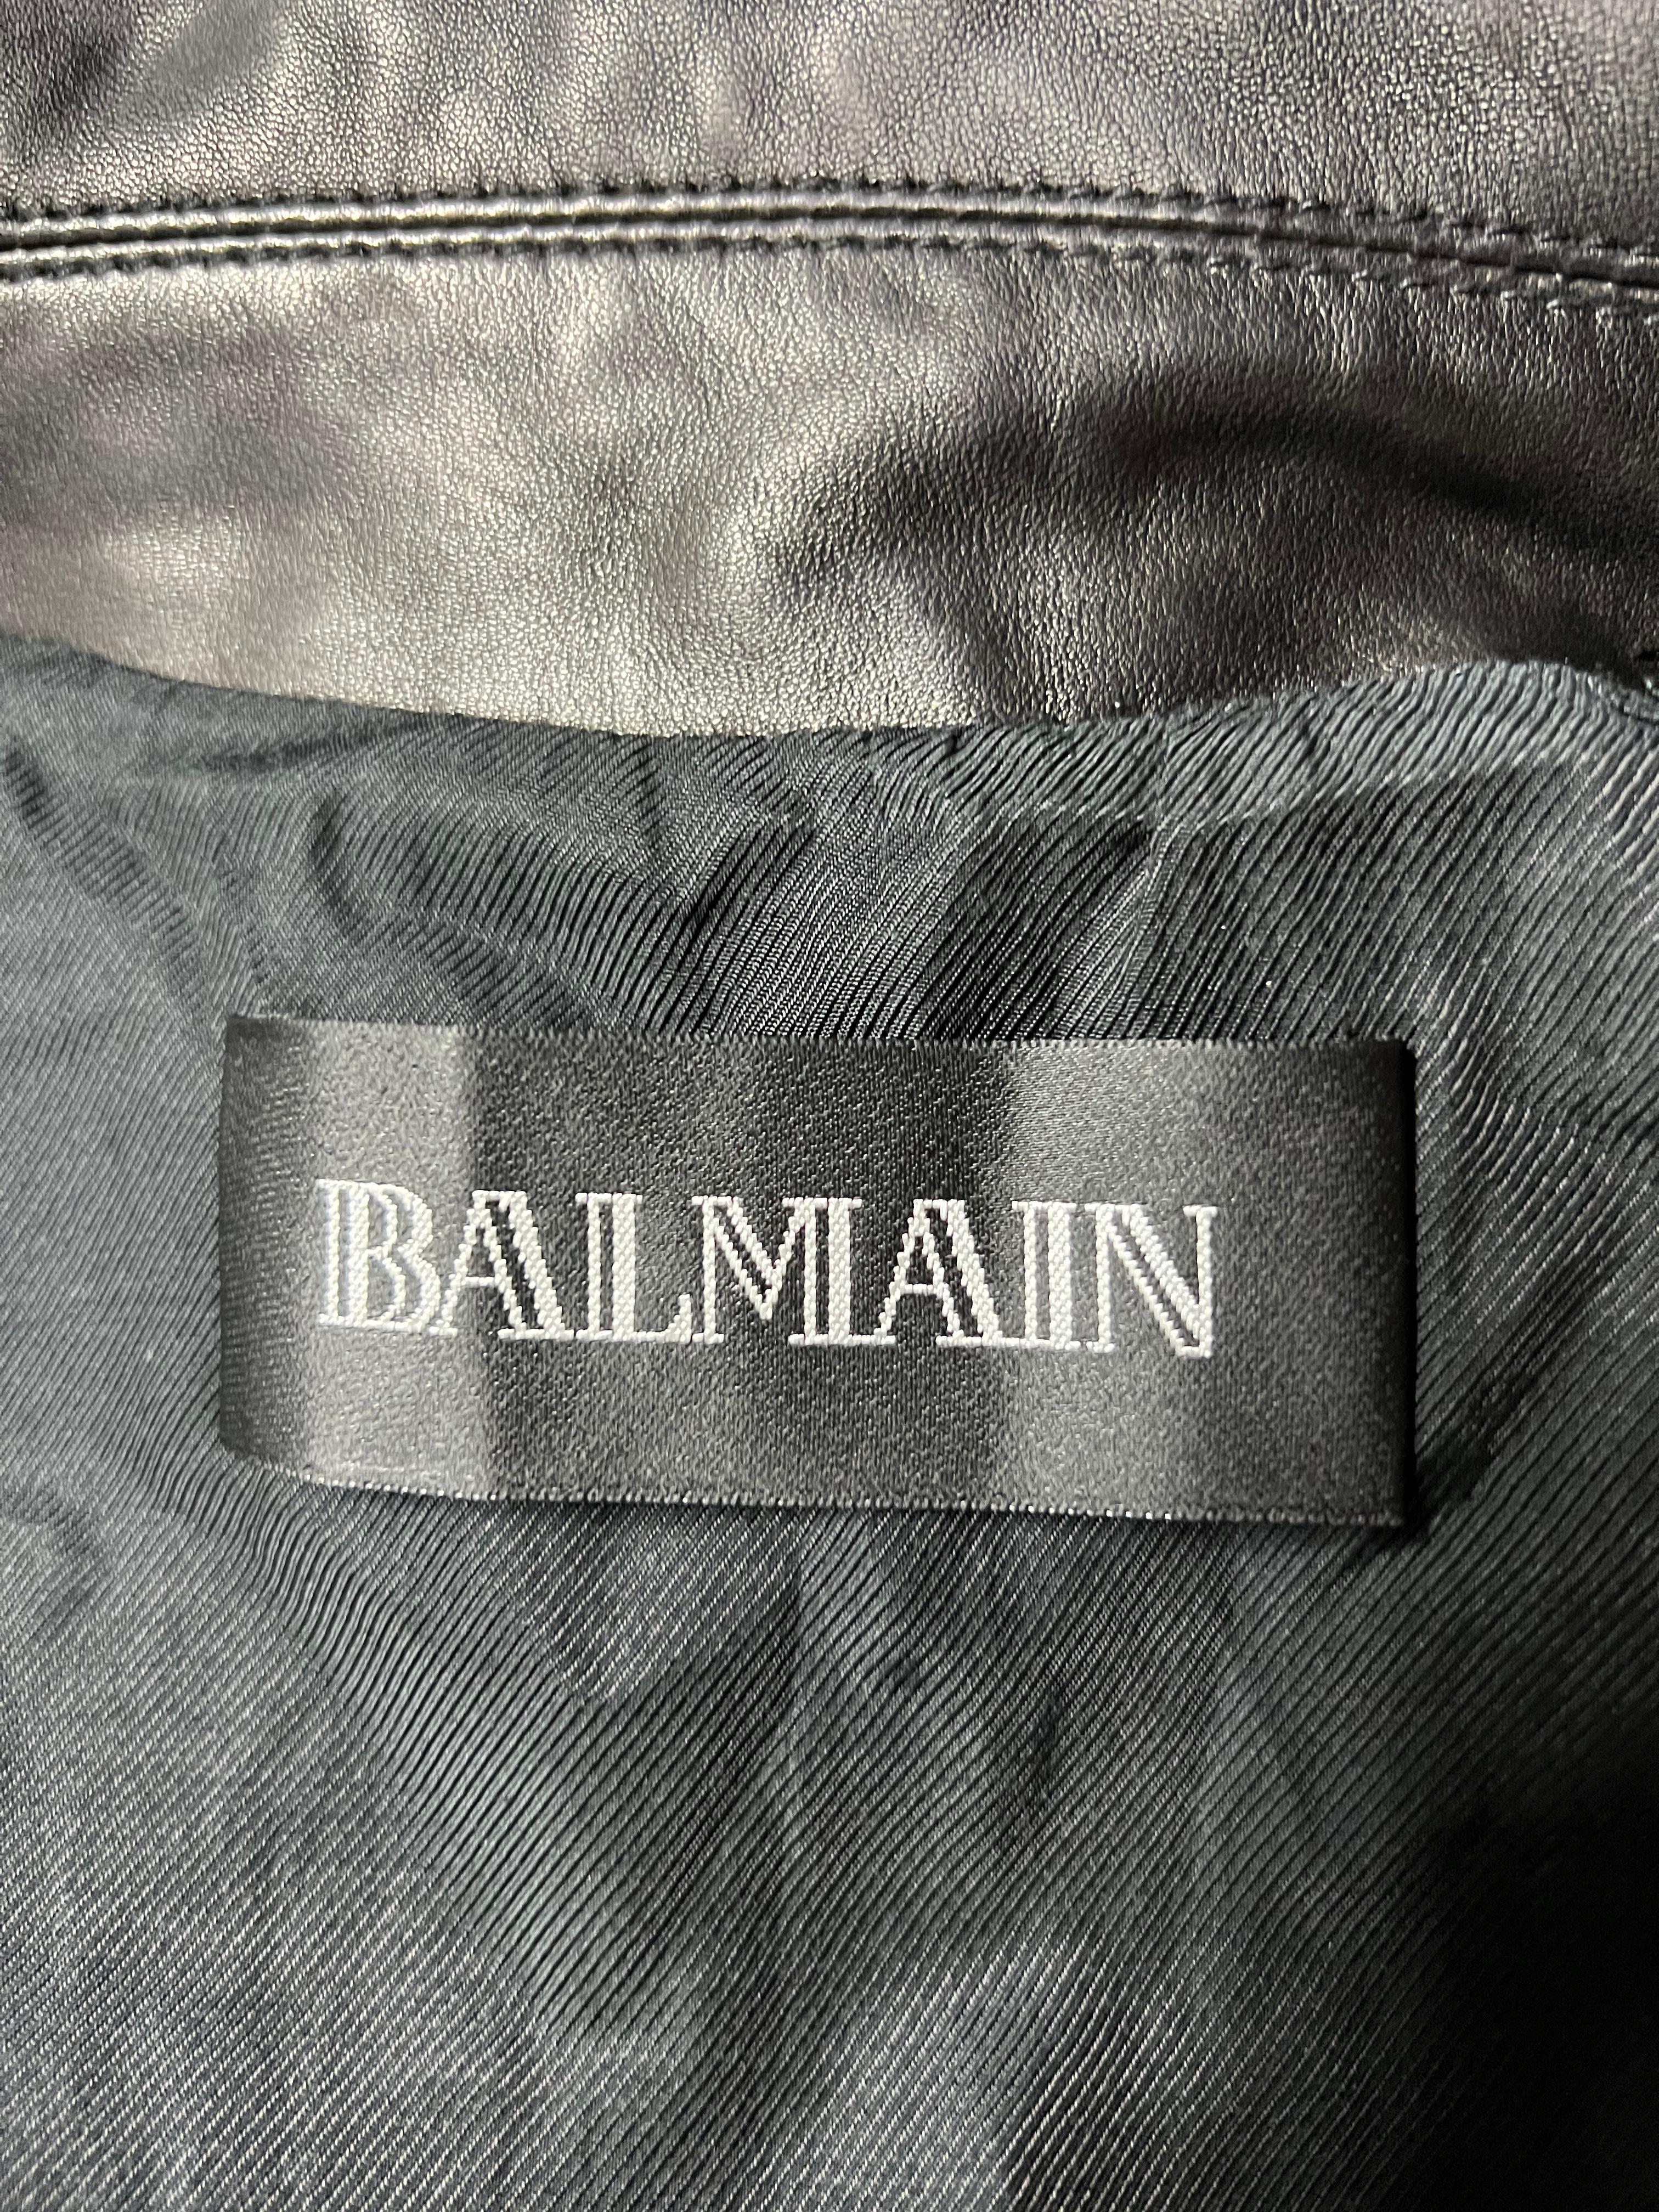 Balmain Black Leather Jacket, Size 38 For Sale 6